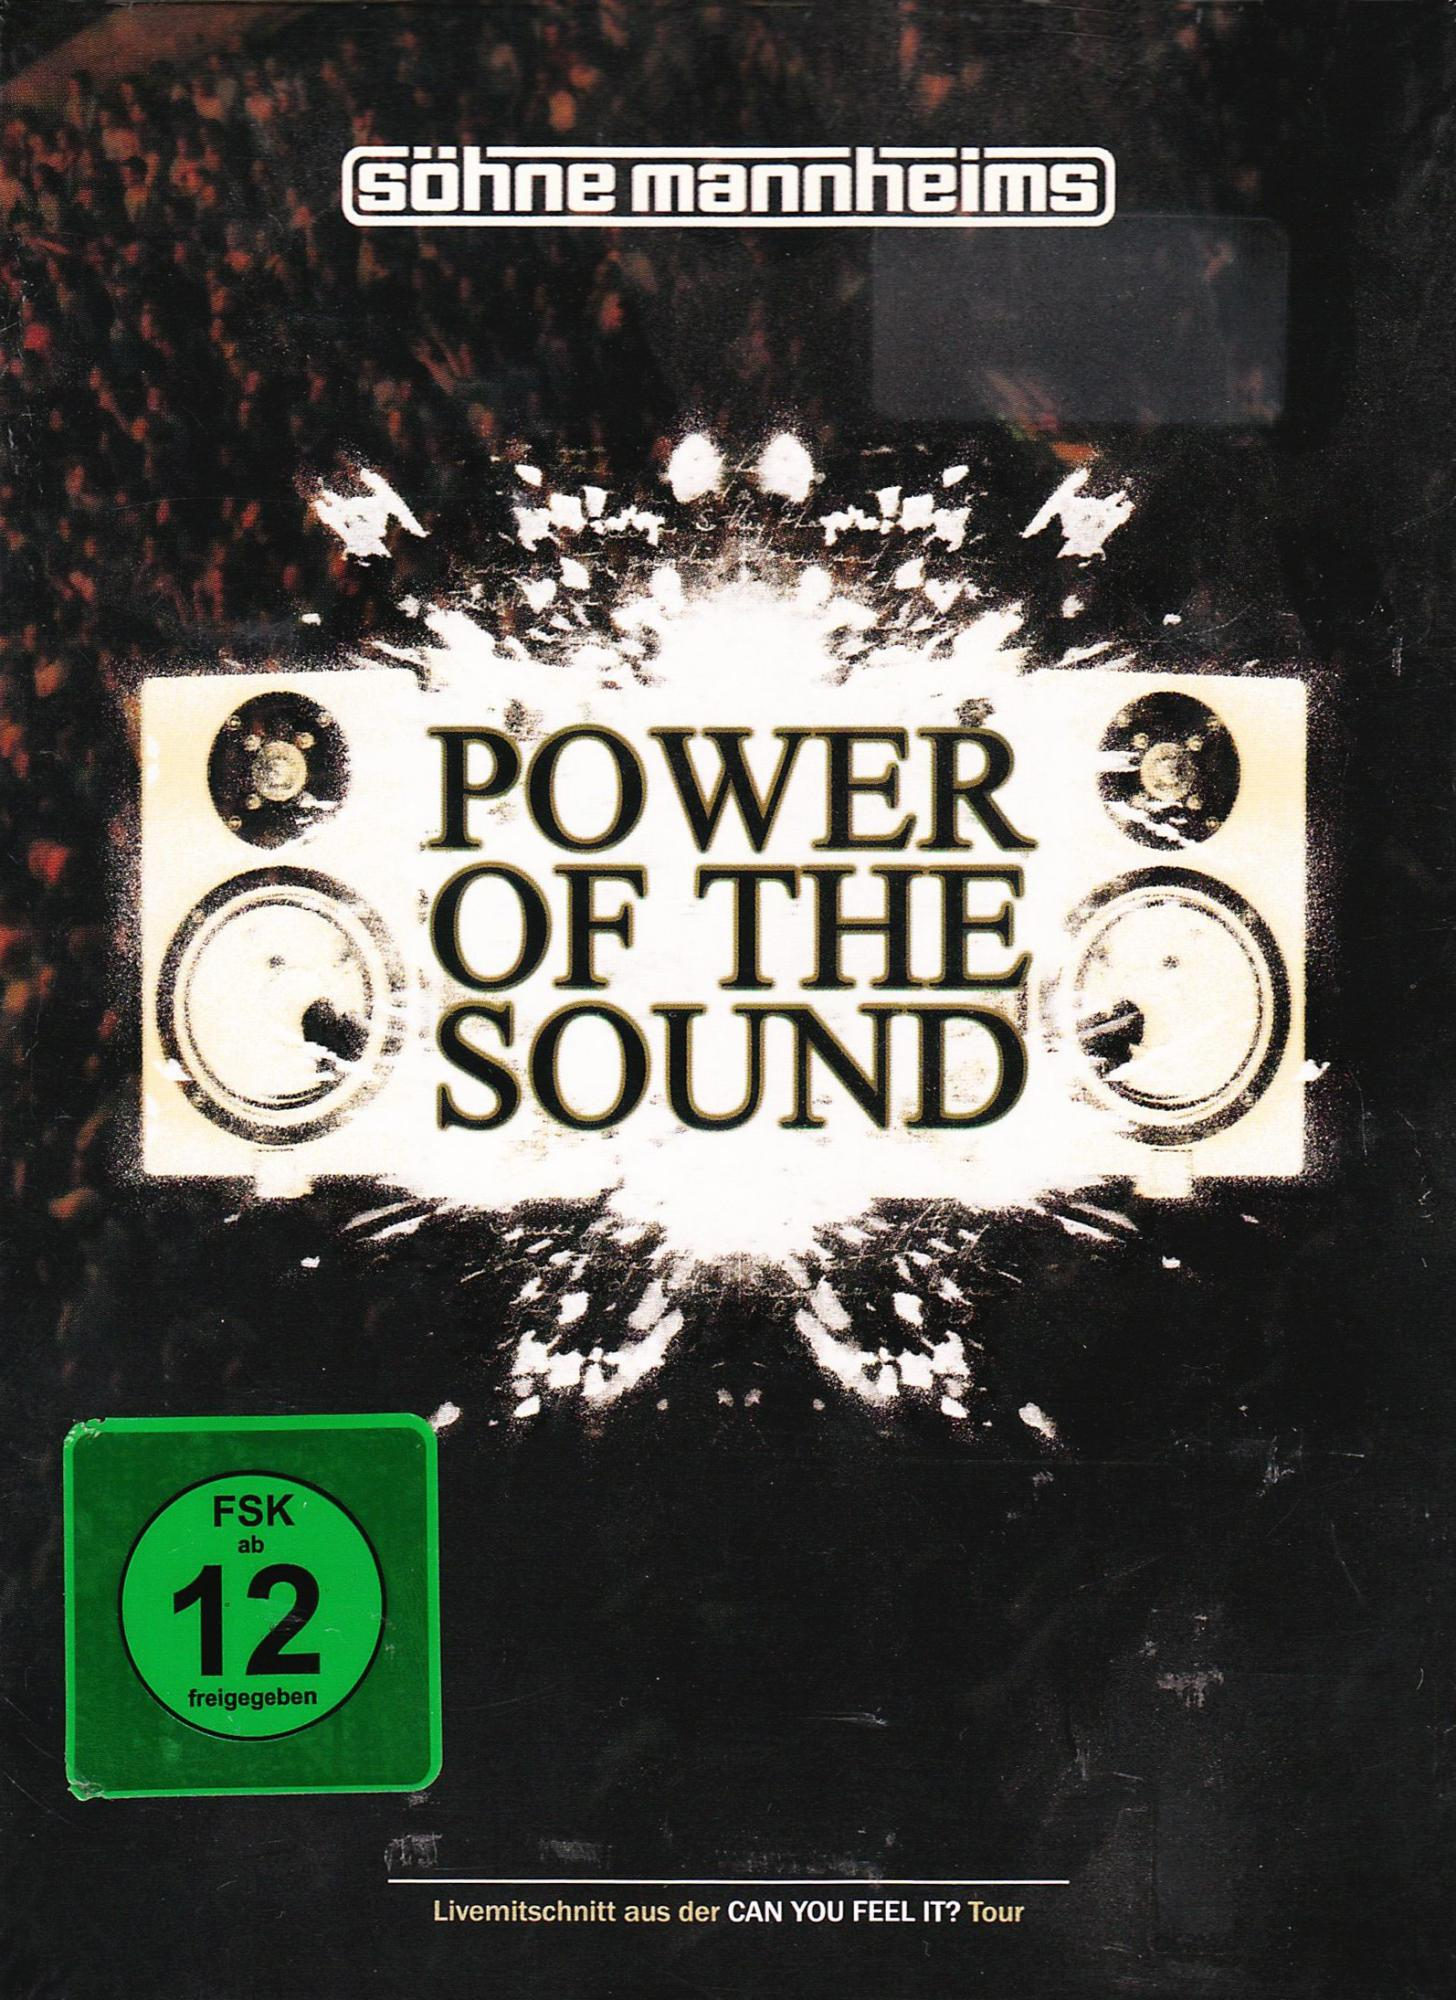 Of Mannheims - Söhne The Sound Söhne Power - (DVD) Mannheims -